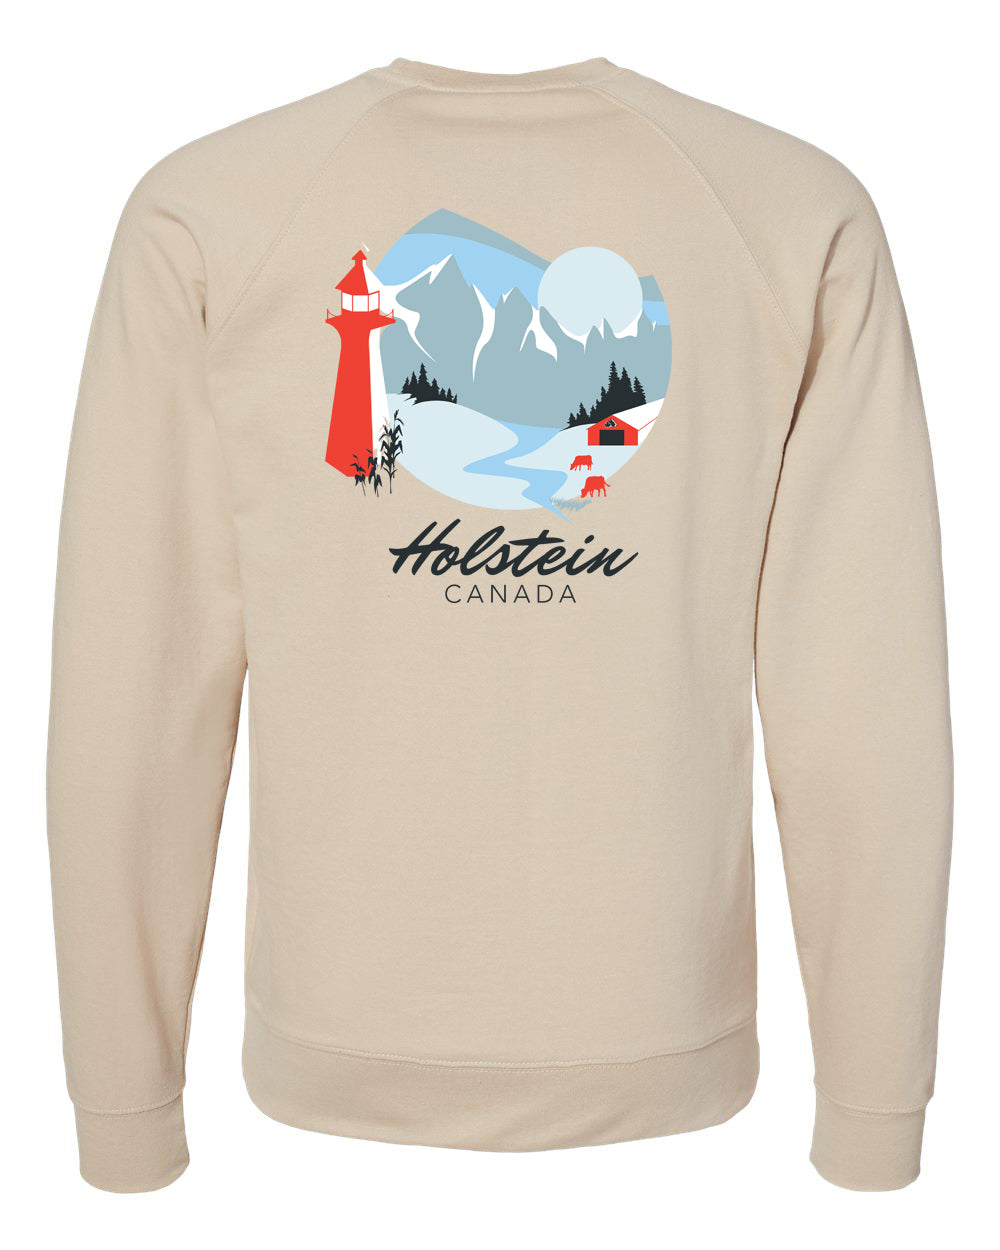 Partout au Canada - Sweat-shirt Holstein Canada